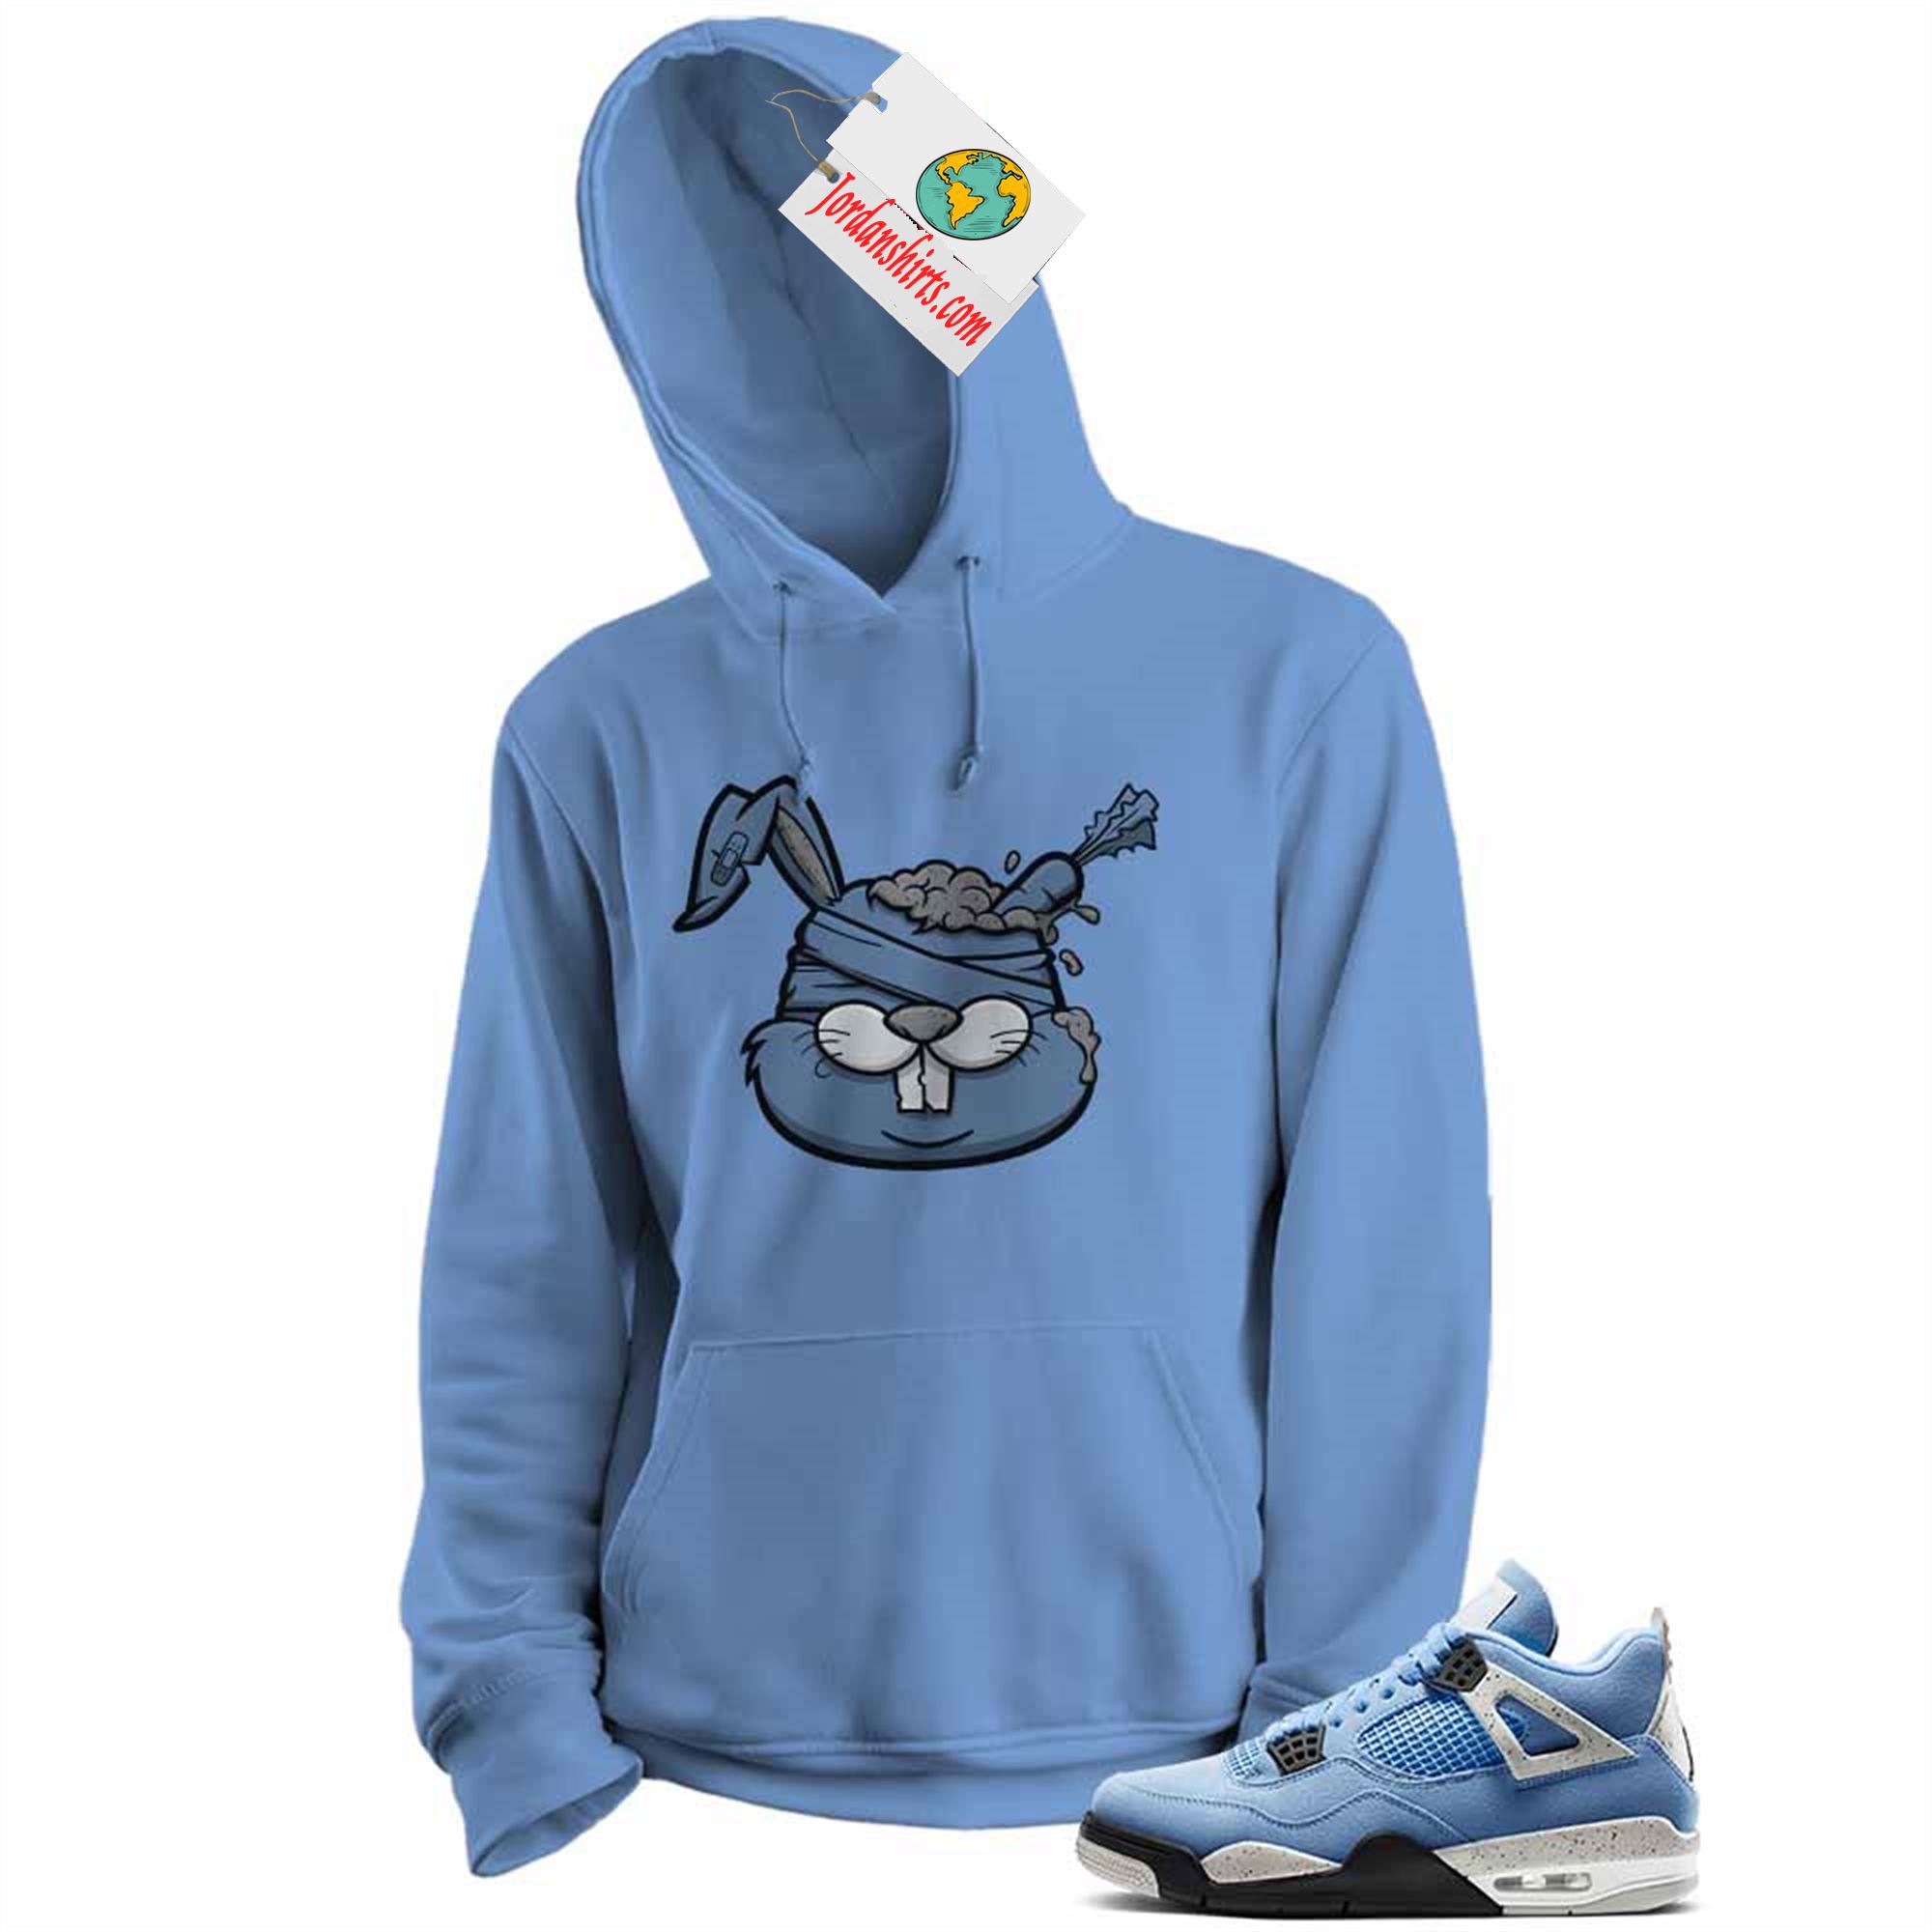 Jordan 4 Sweatshirt, Zombie Bunny Blue Sweatshirt Air Jordan 4 University Blue 4s Full Size Up To 5xl